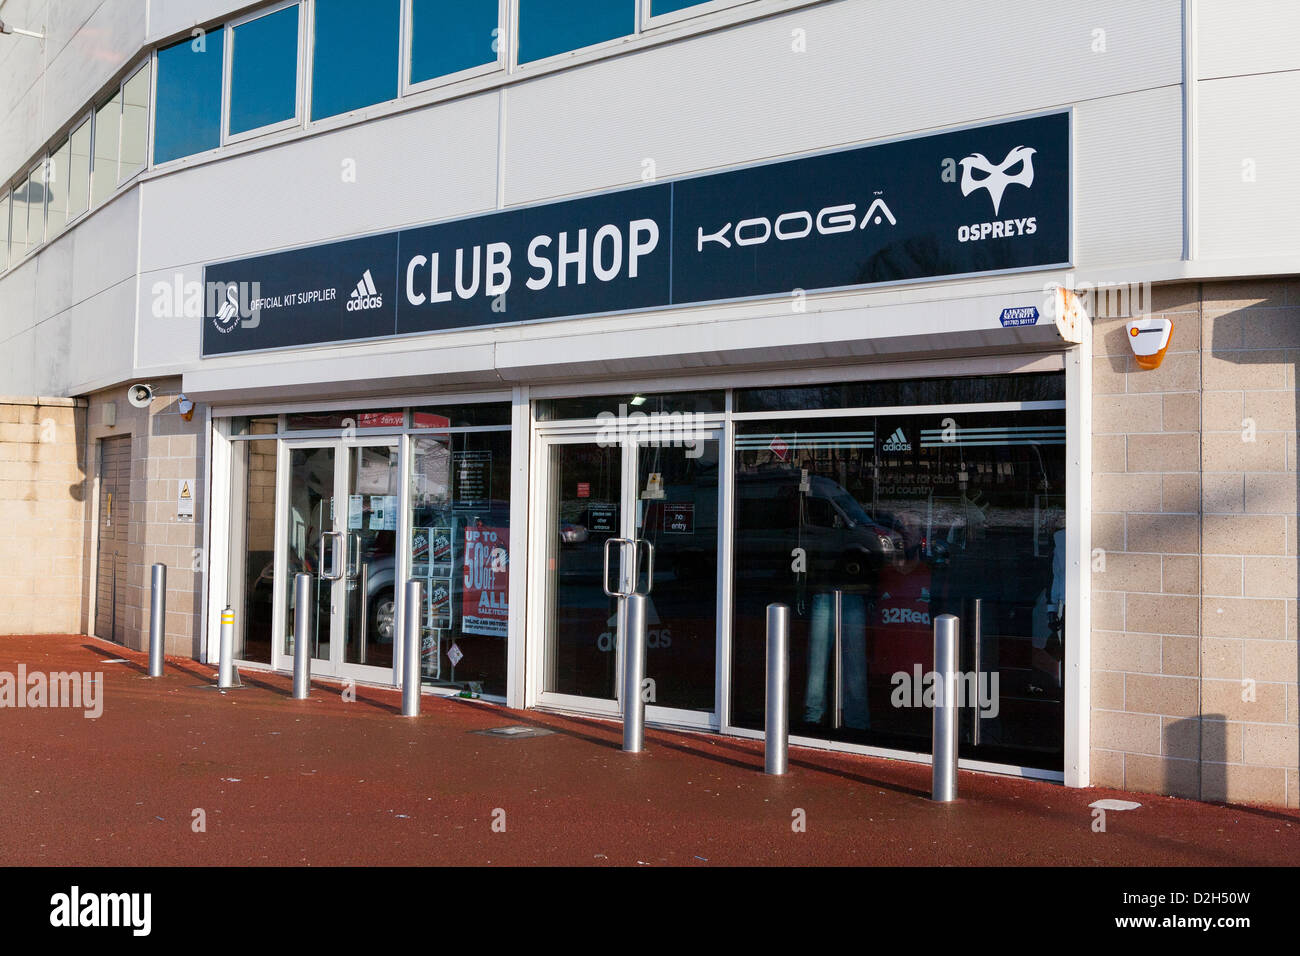 Liberty stadium club shop. The club shop of Swansea City FC and Ospreys. Swansea. Stock Photo